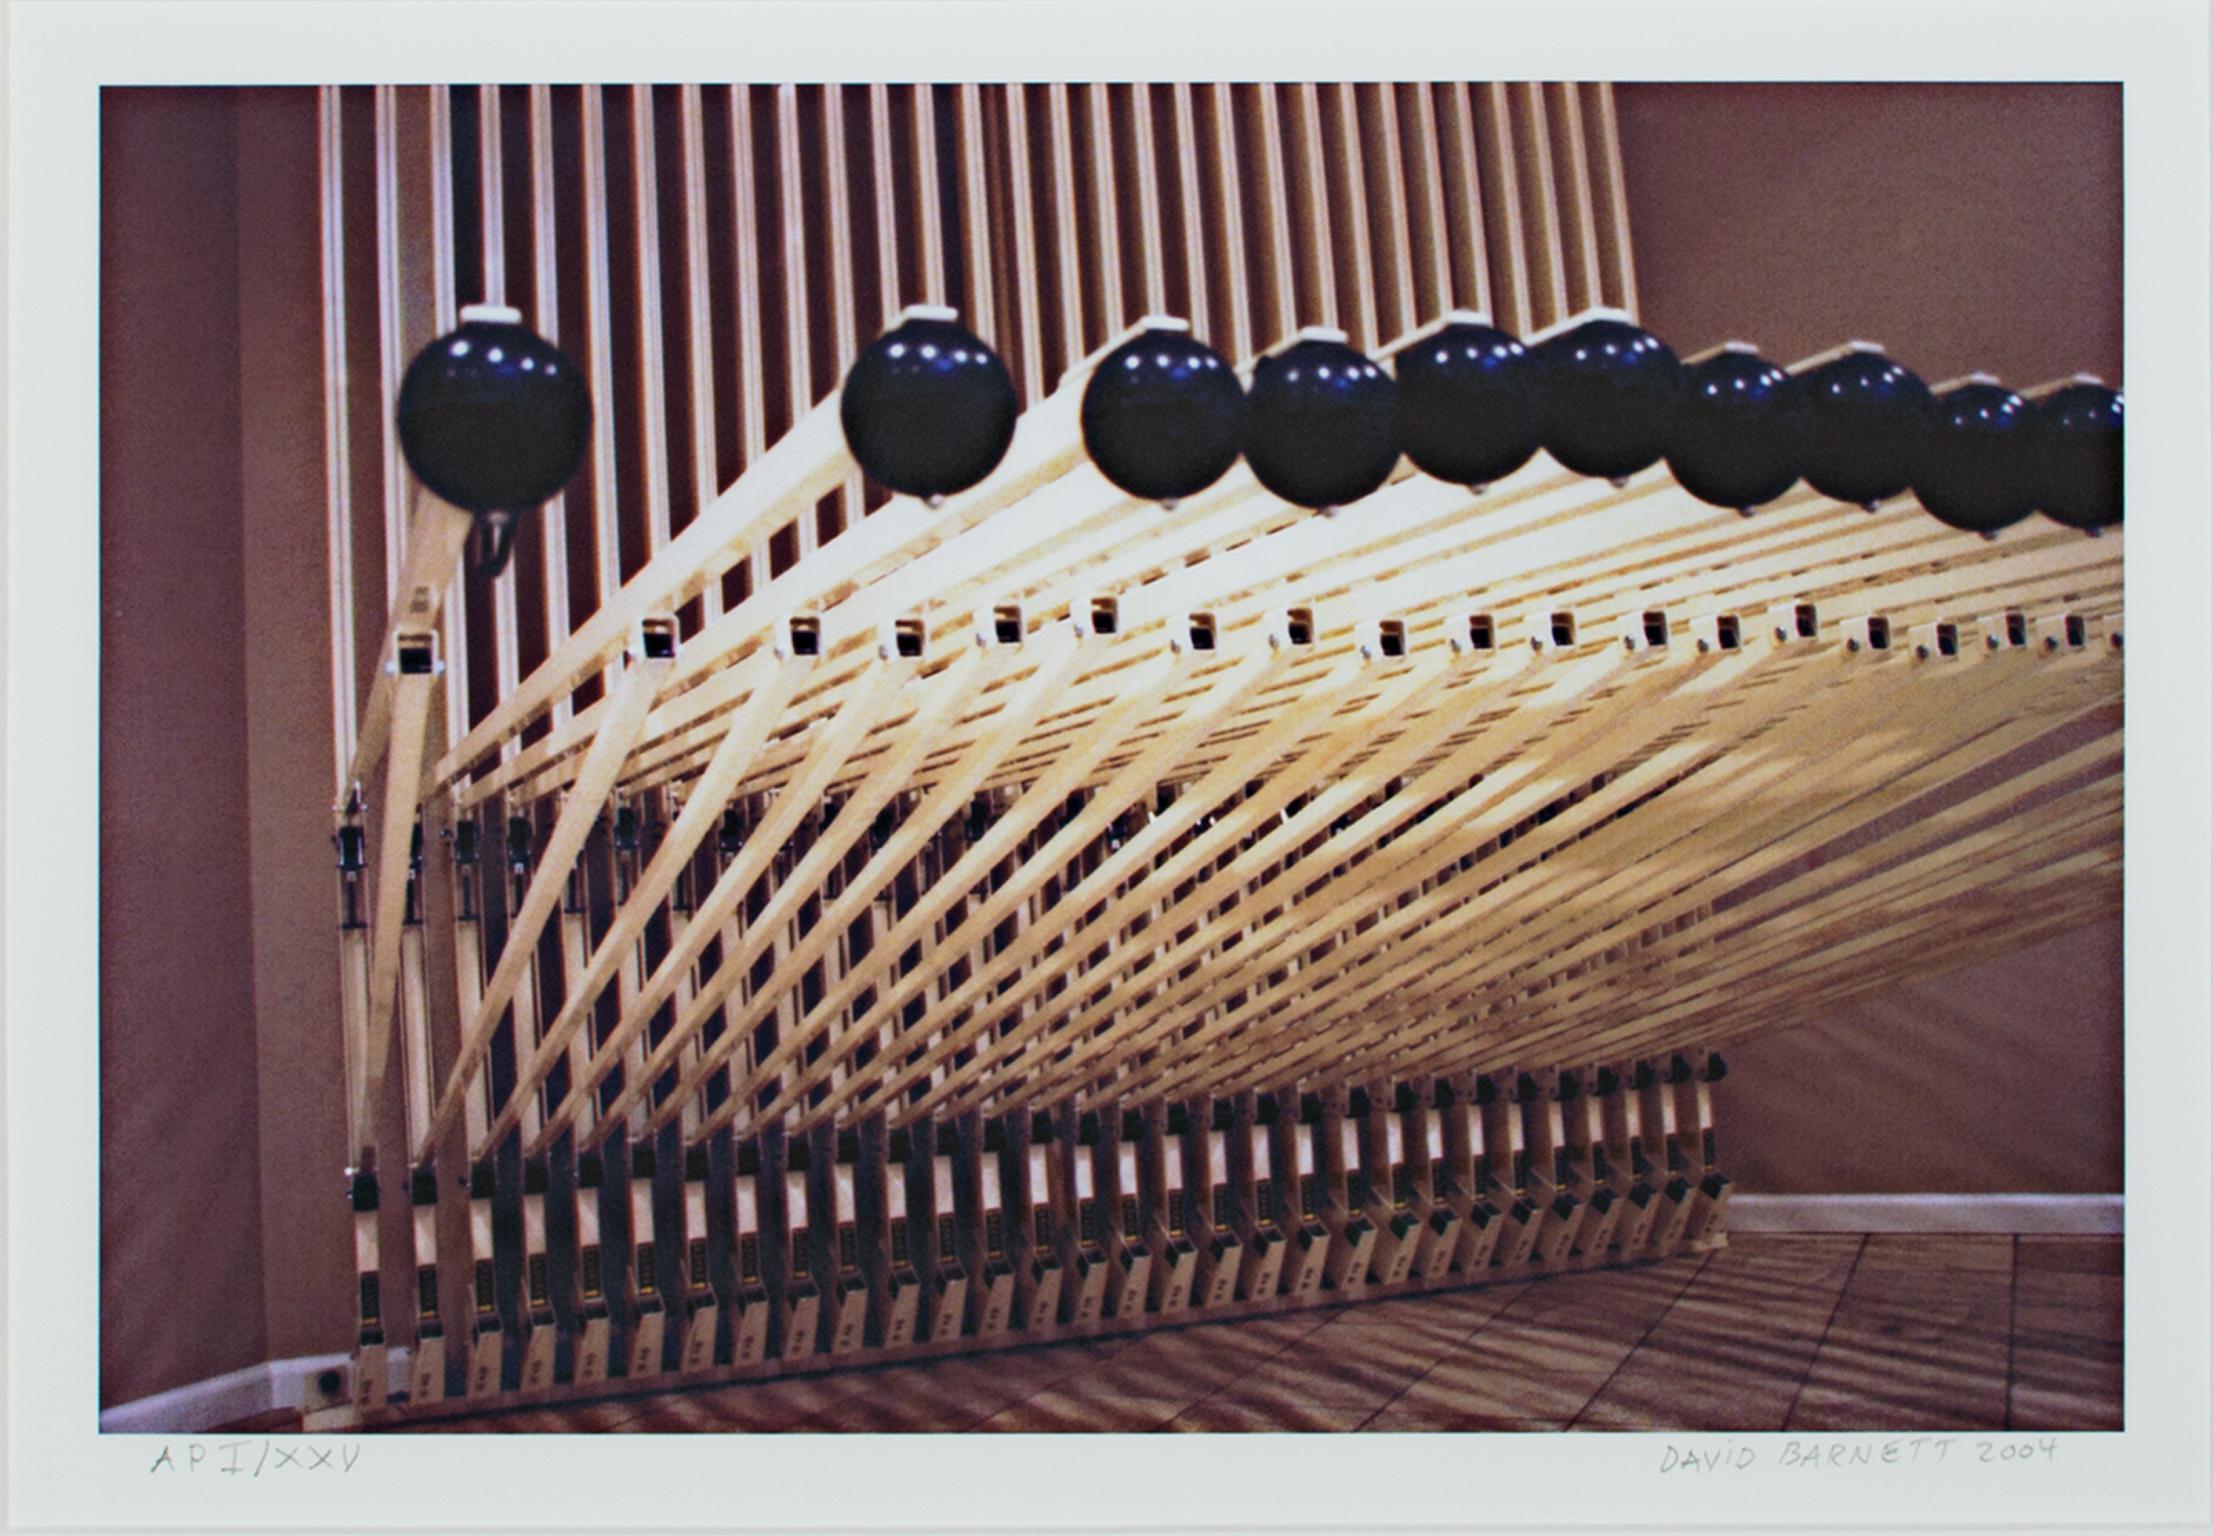 "Steinhafel's Musical Syncopated Rug Rack Sculpture" Photograph by David Barnett